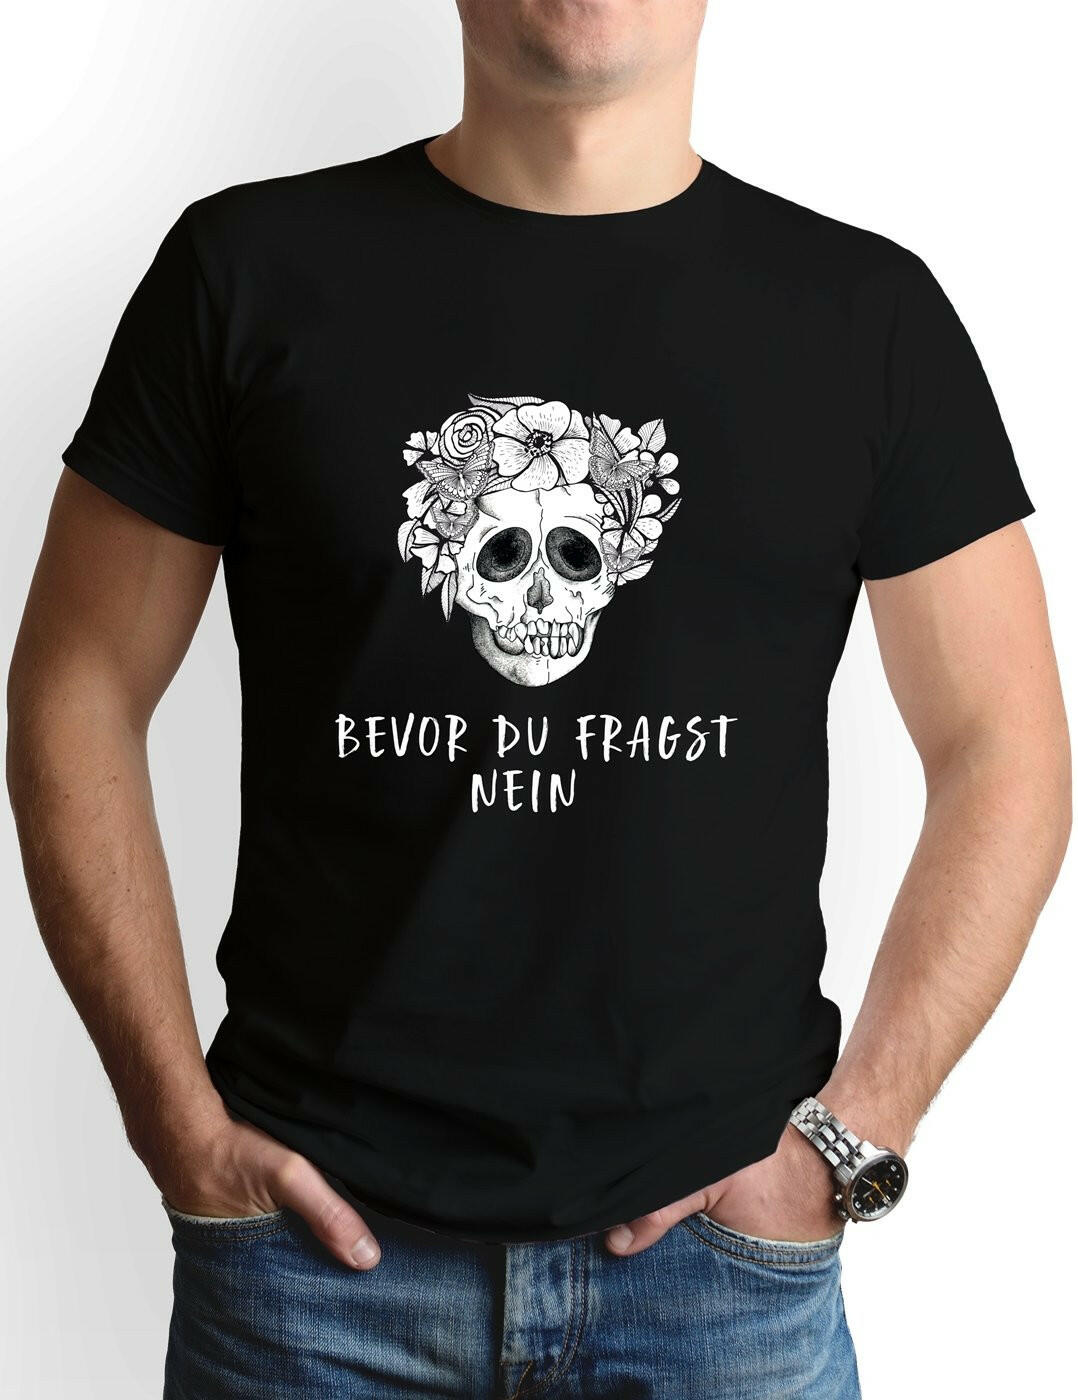 Bild: T-Shirt Herren - Bevor du fragst NEIN - Totenkopf Geschenkidee